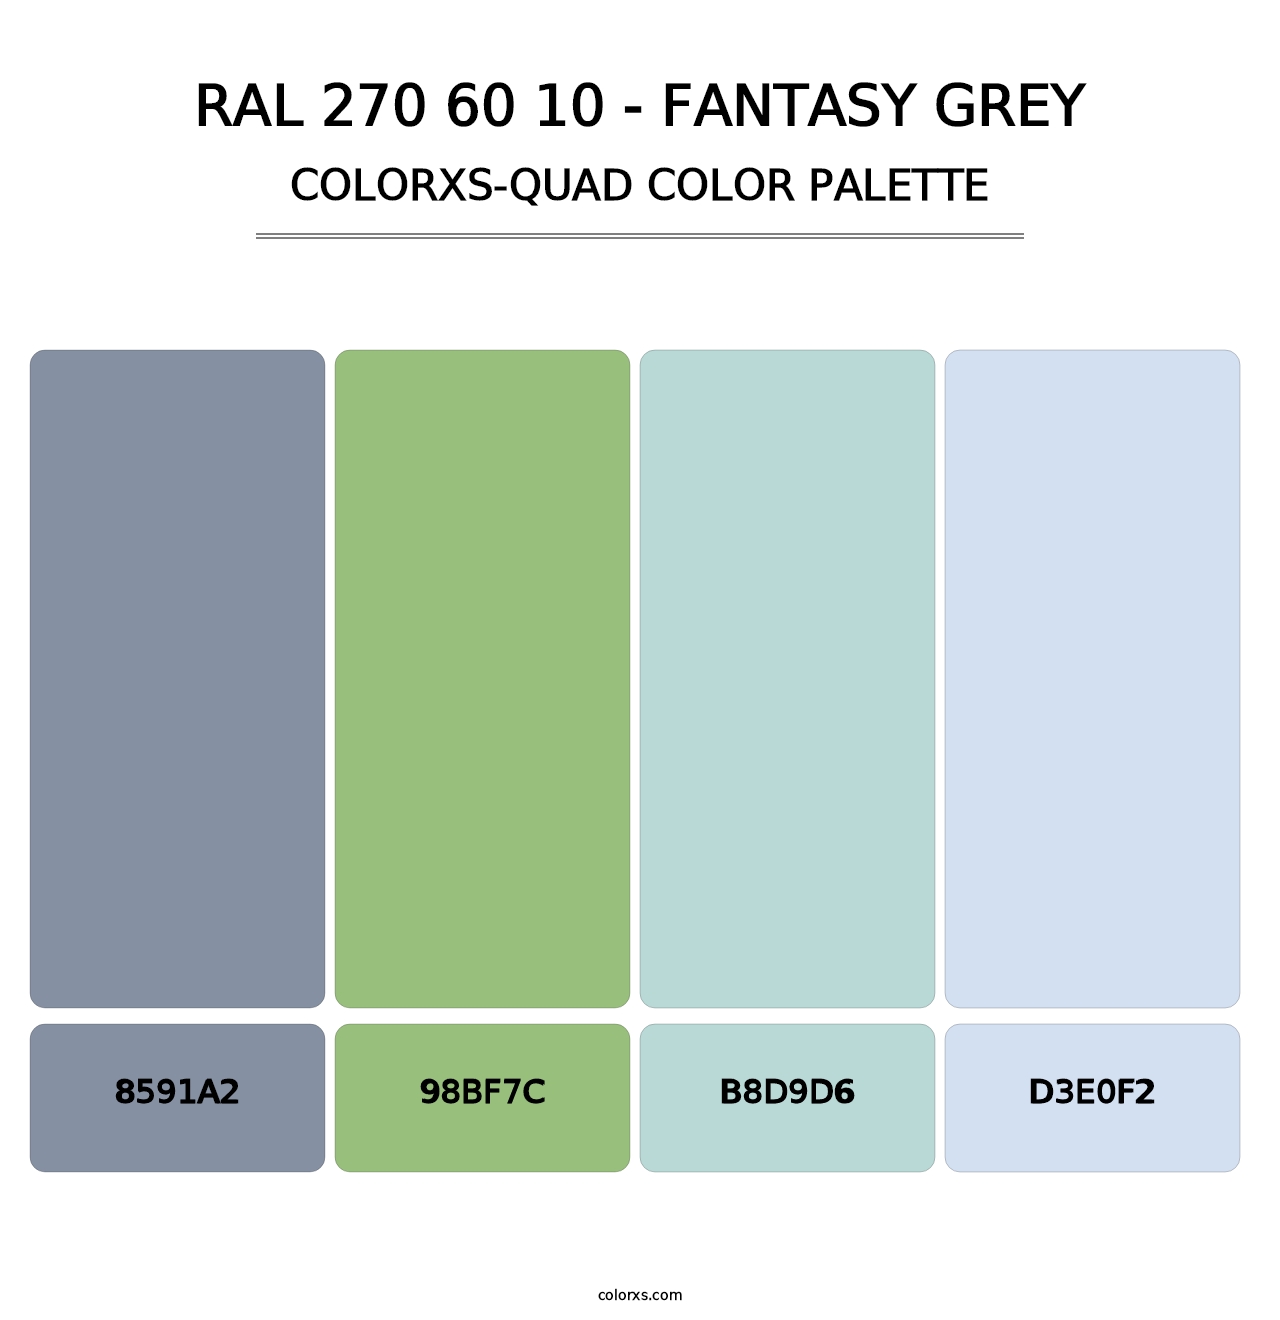 RAL 270 60 10 - Fantasy Grey - Colorxs Quad Palette